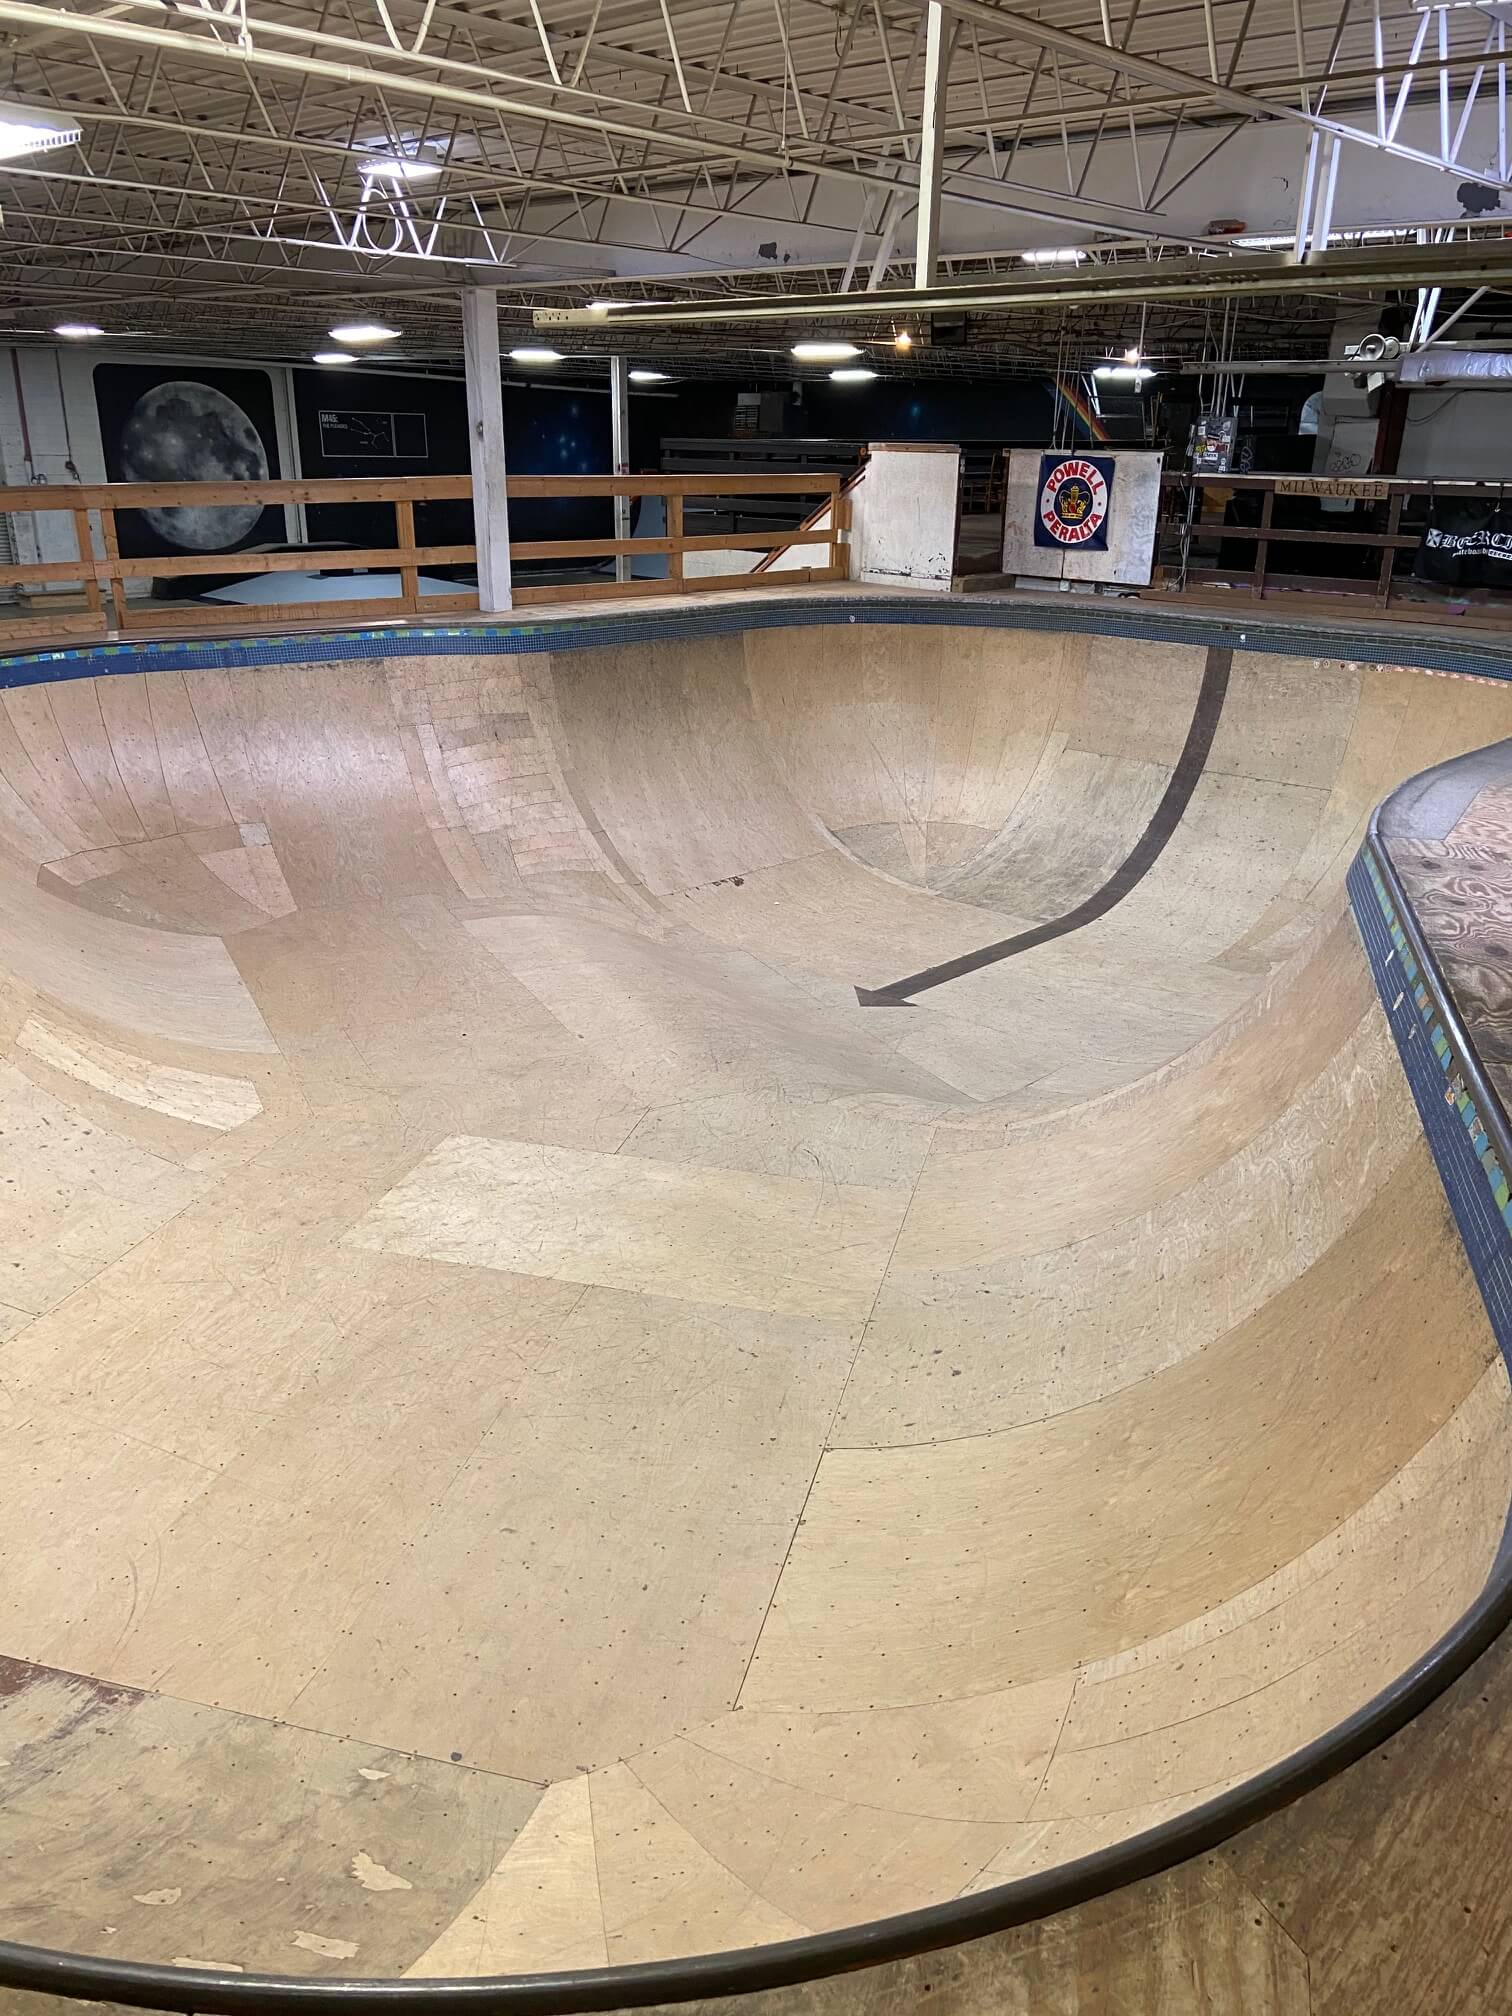 Cream City Skateboard Park